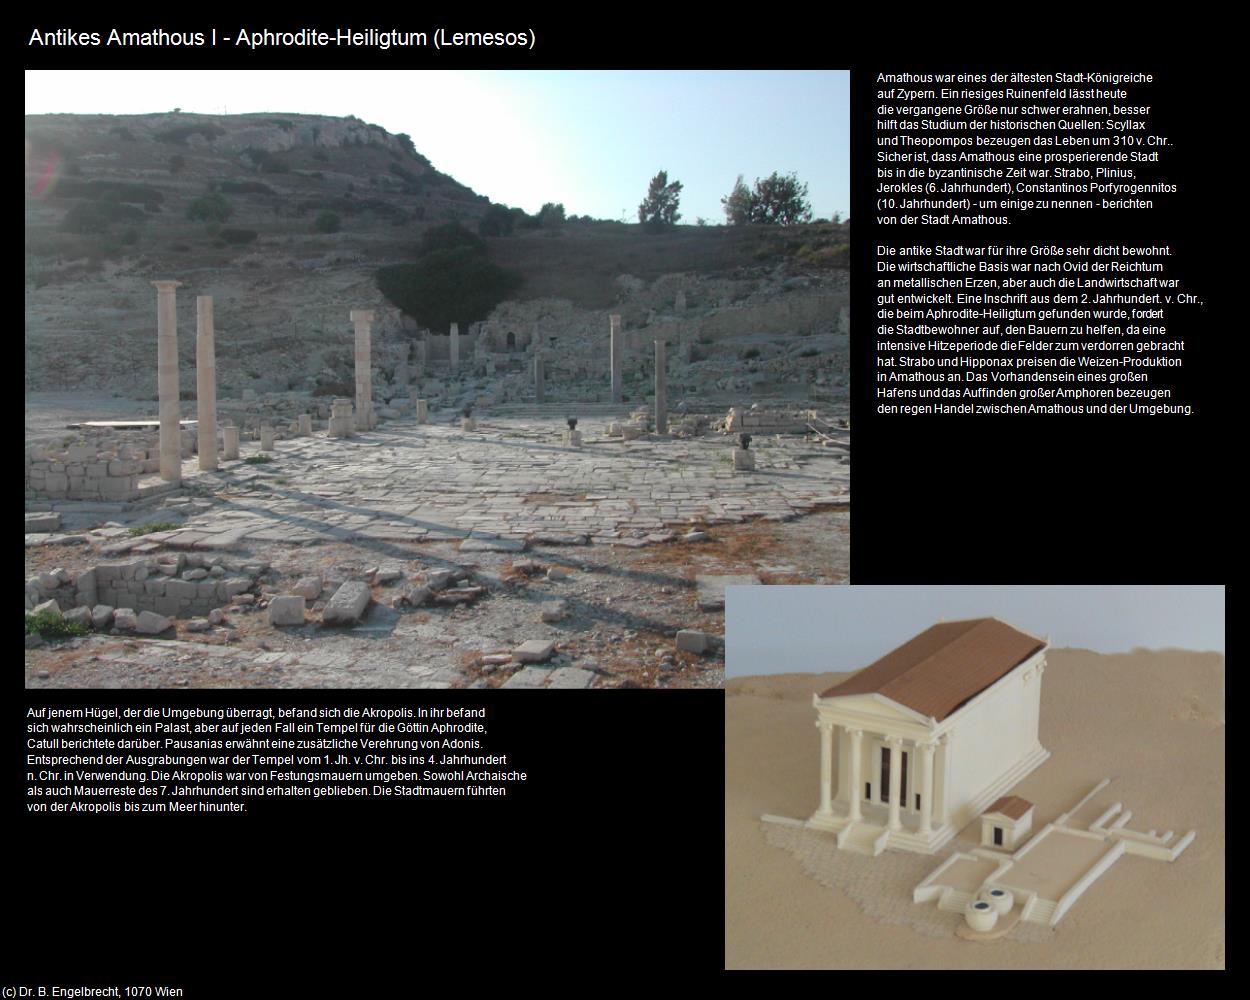 Antikes Amathous I - Tempel (Lemesos) in ZYPERN-Insel der Aphrodite